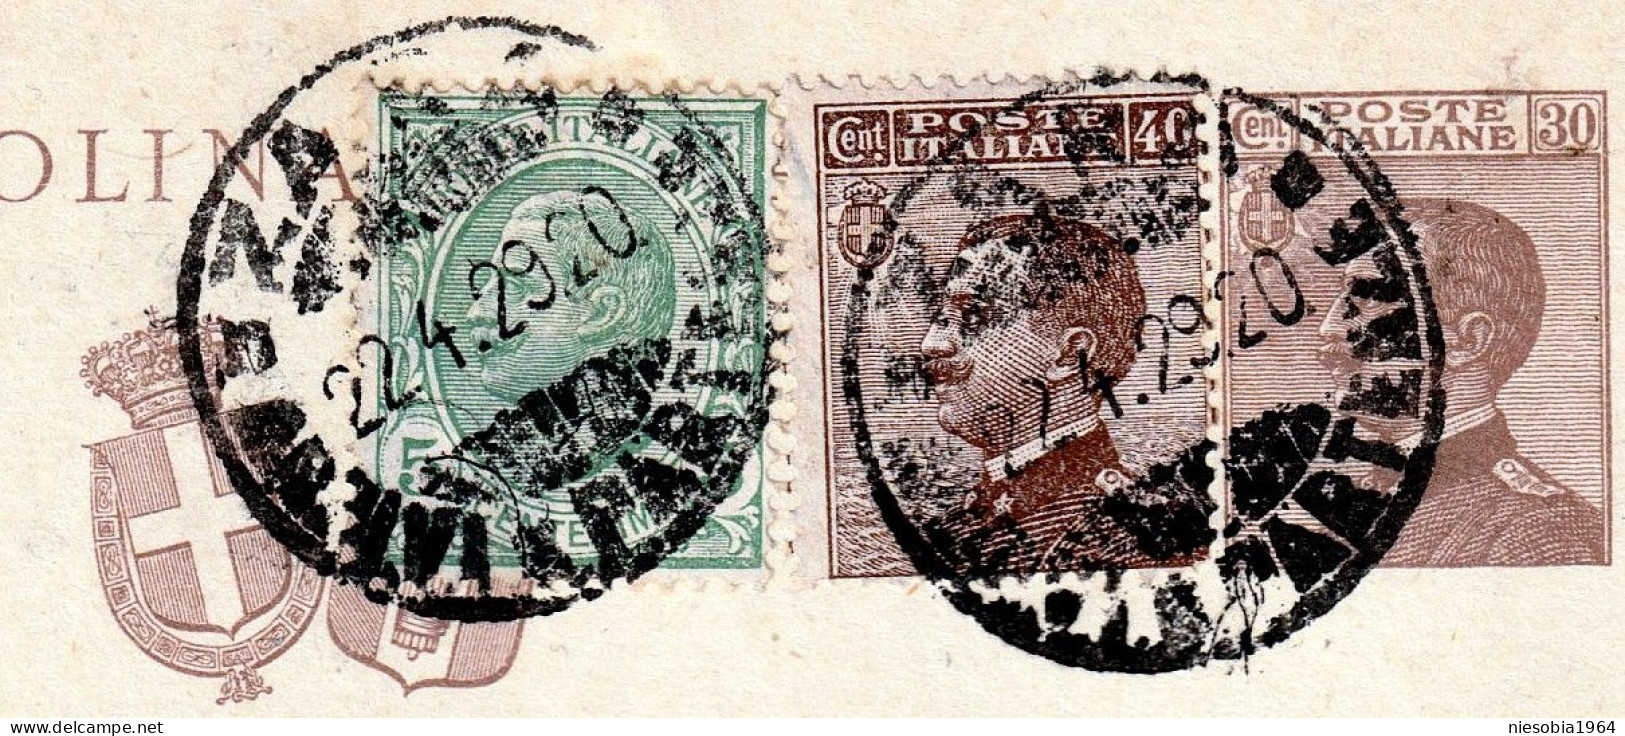 Vintage Italian Postcard / Cartolina Italiana III Stamps Seal Zara 22.04.1929 - Postwaardestukken